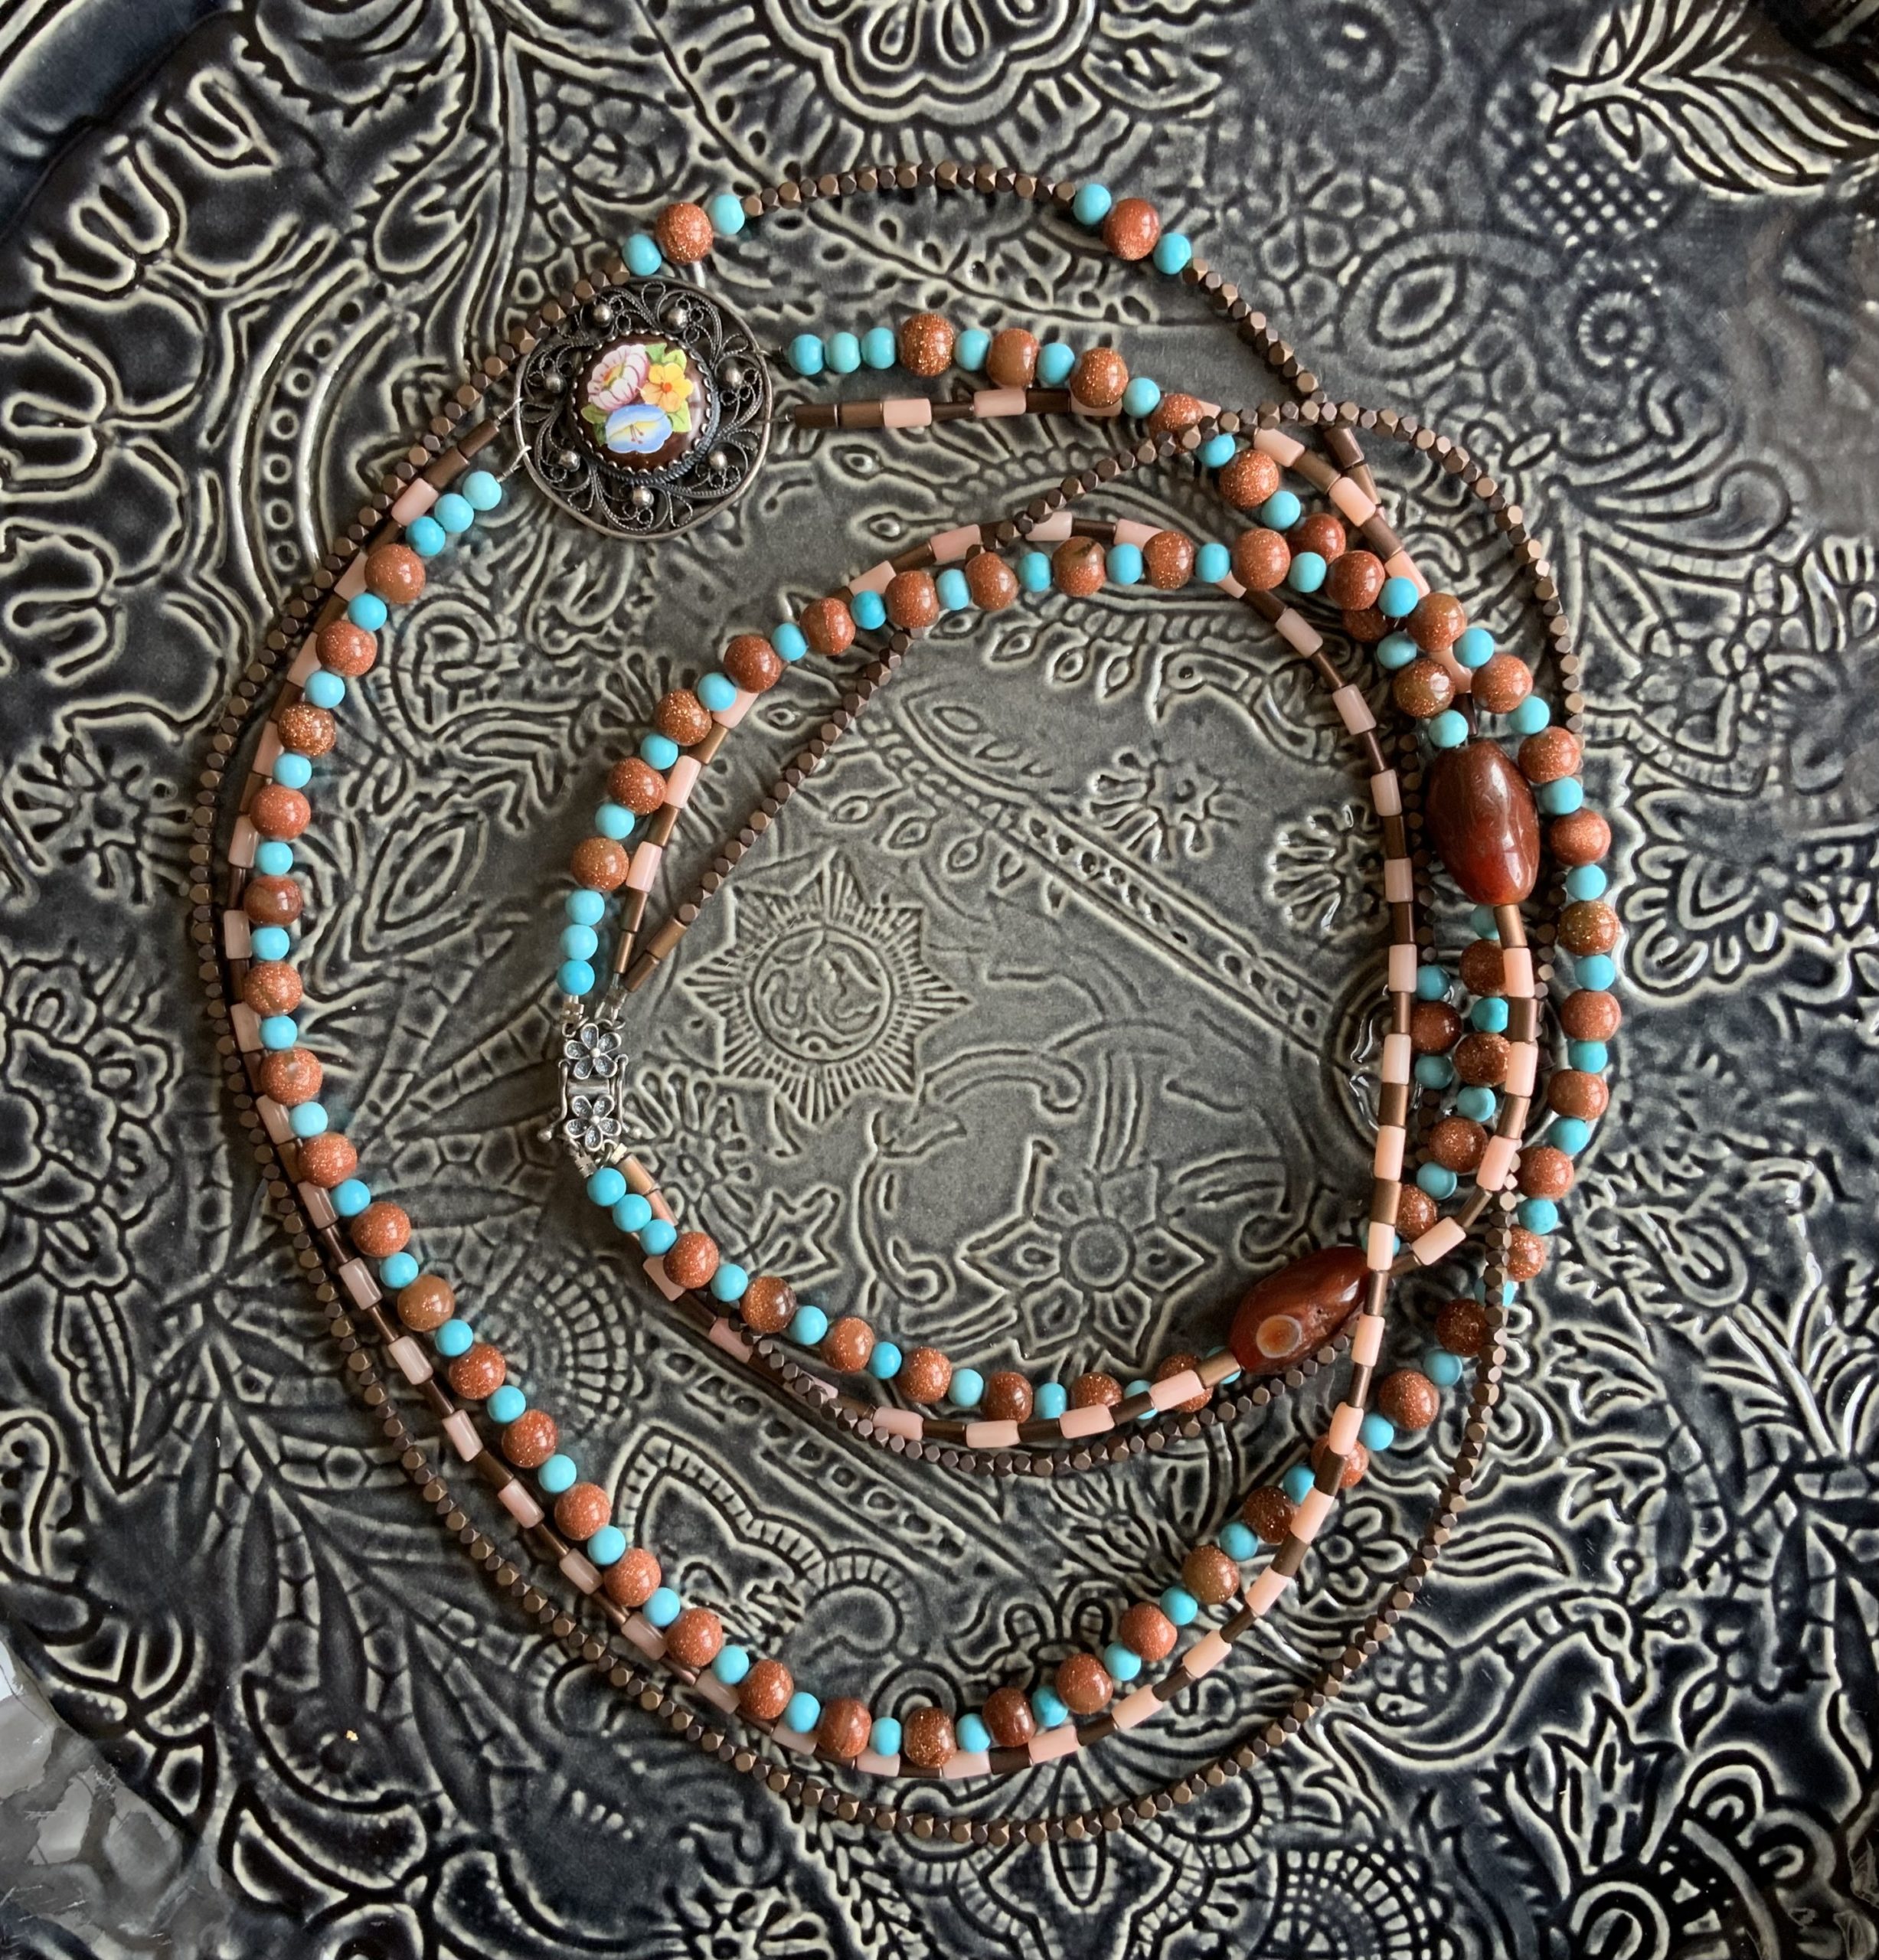 Russian tsarine necklace